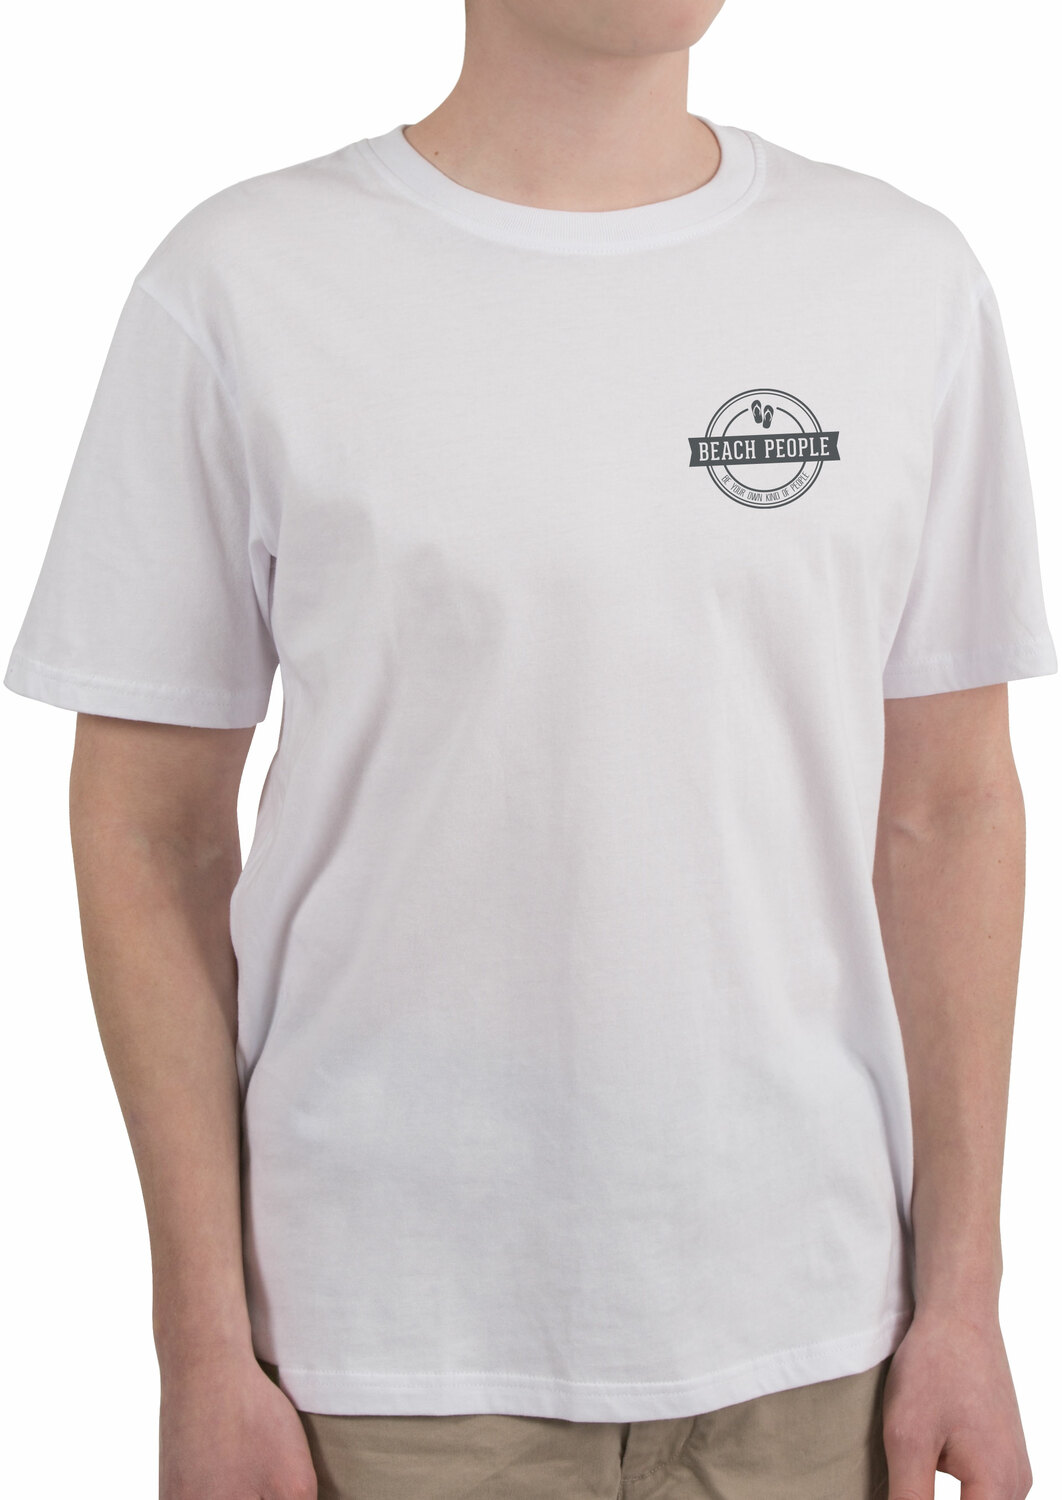 Beach People by We People - Beach People - Medium White Unisex T-Shirt